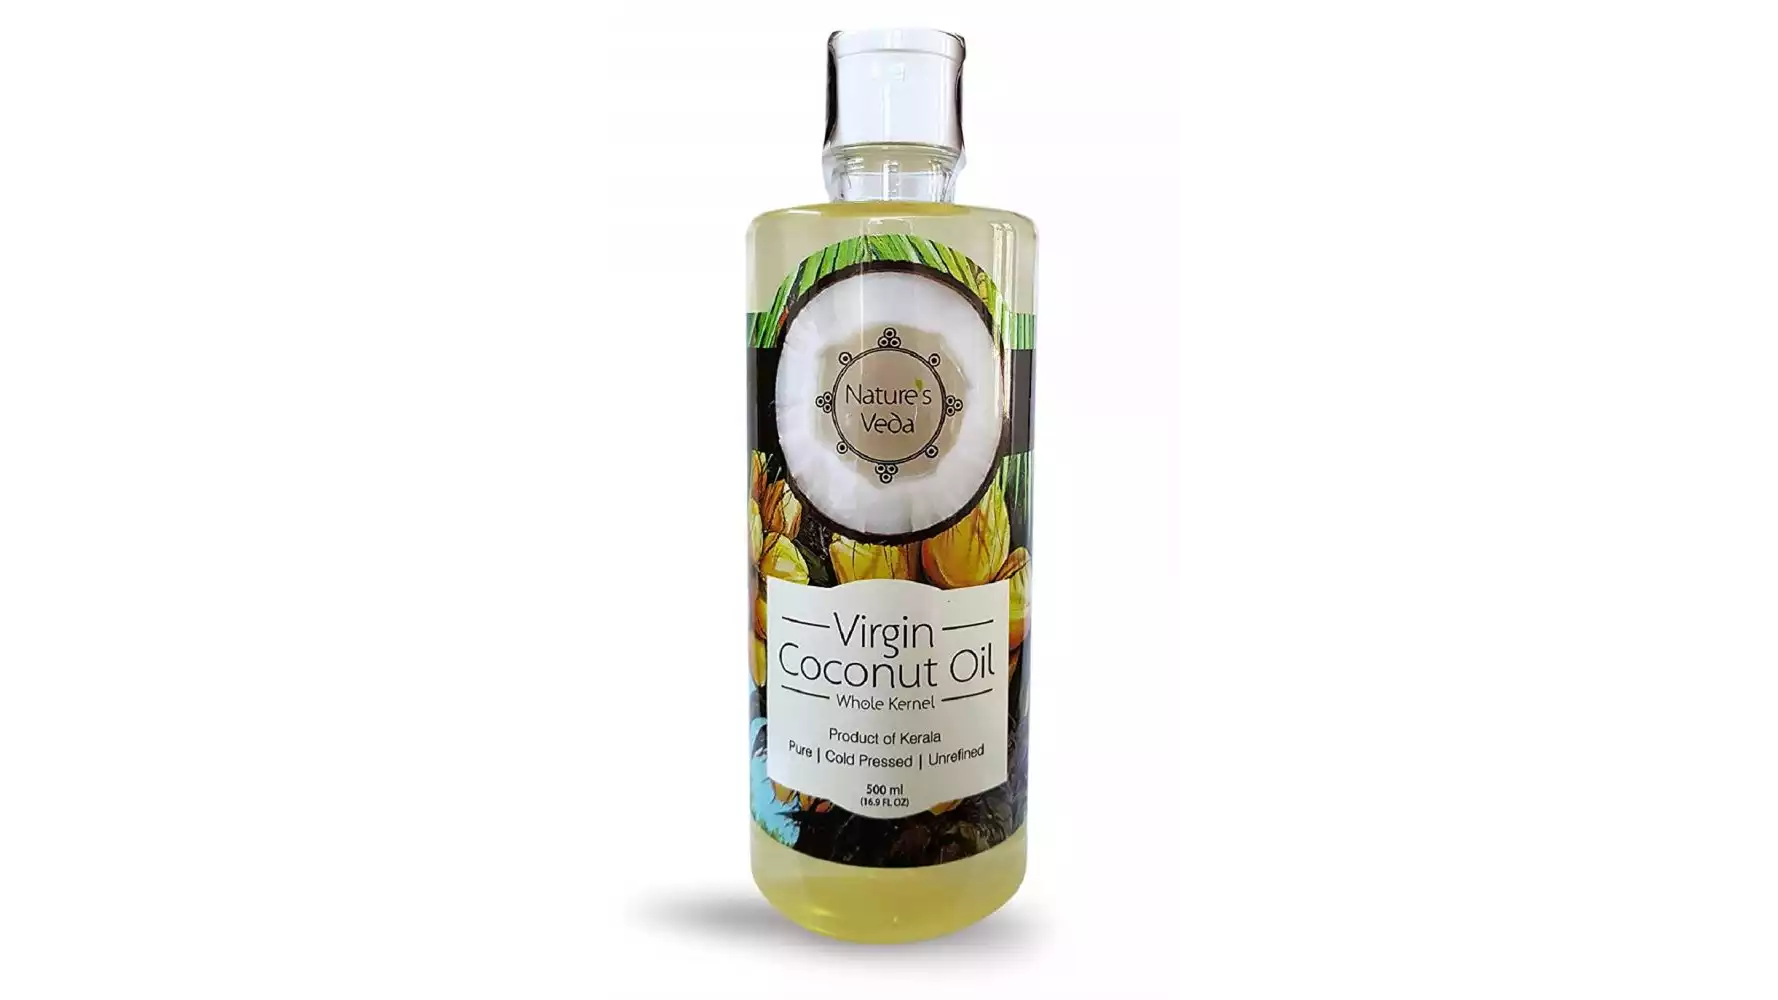 Nature's Veda Virgin Coconut Oil Cold Pressed (500ml)